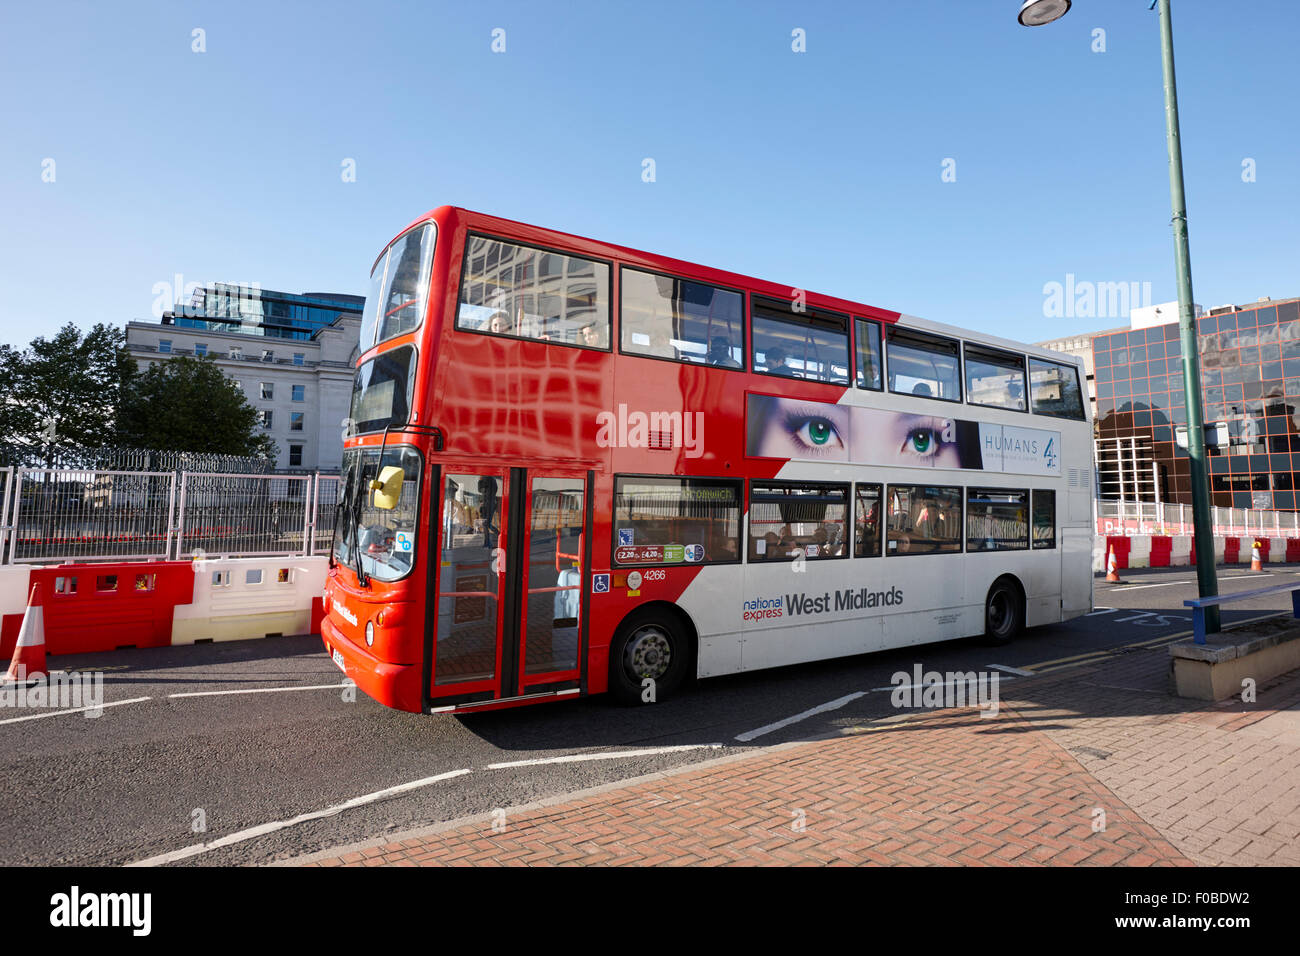 national express west midlands double decker bus service Birmingham city centre UK Stock Photo